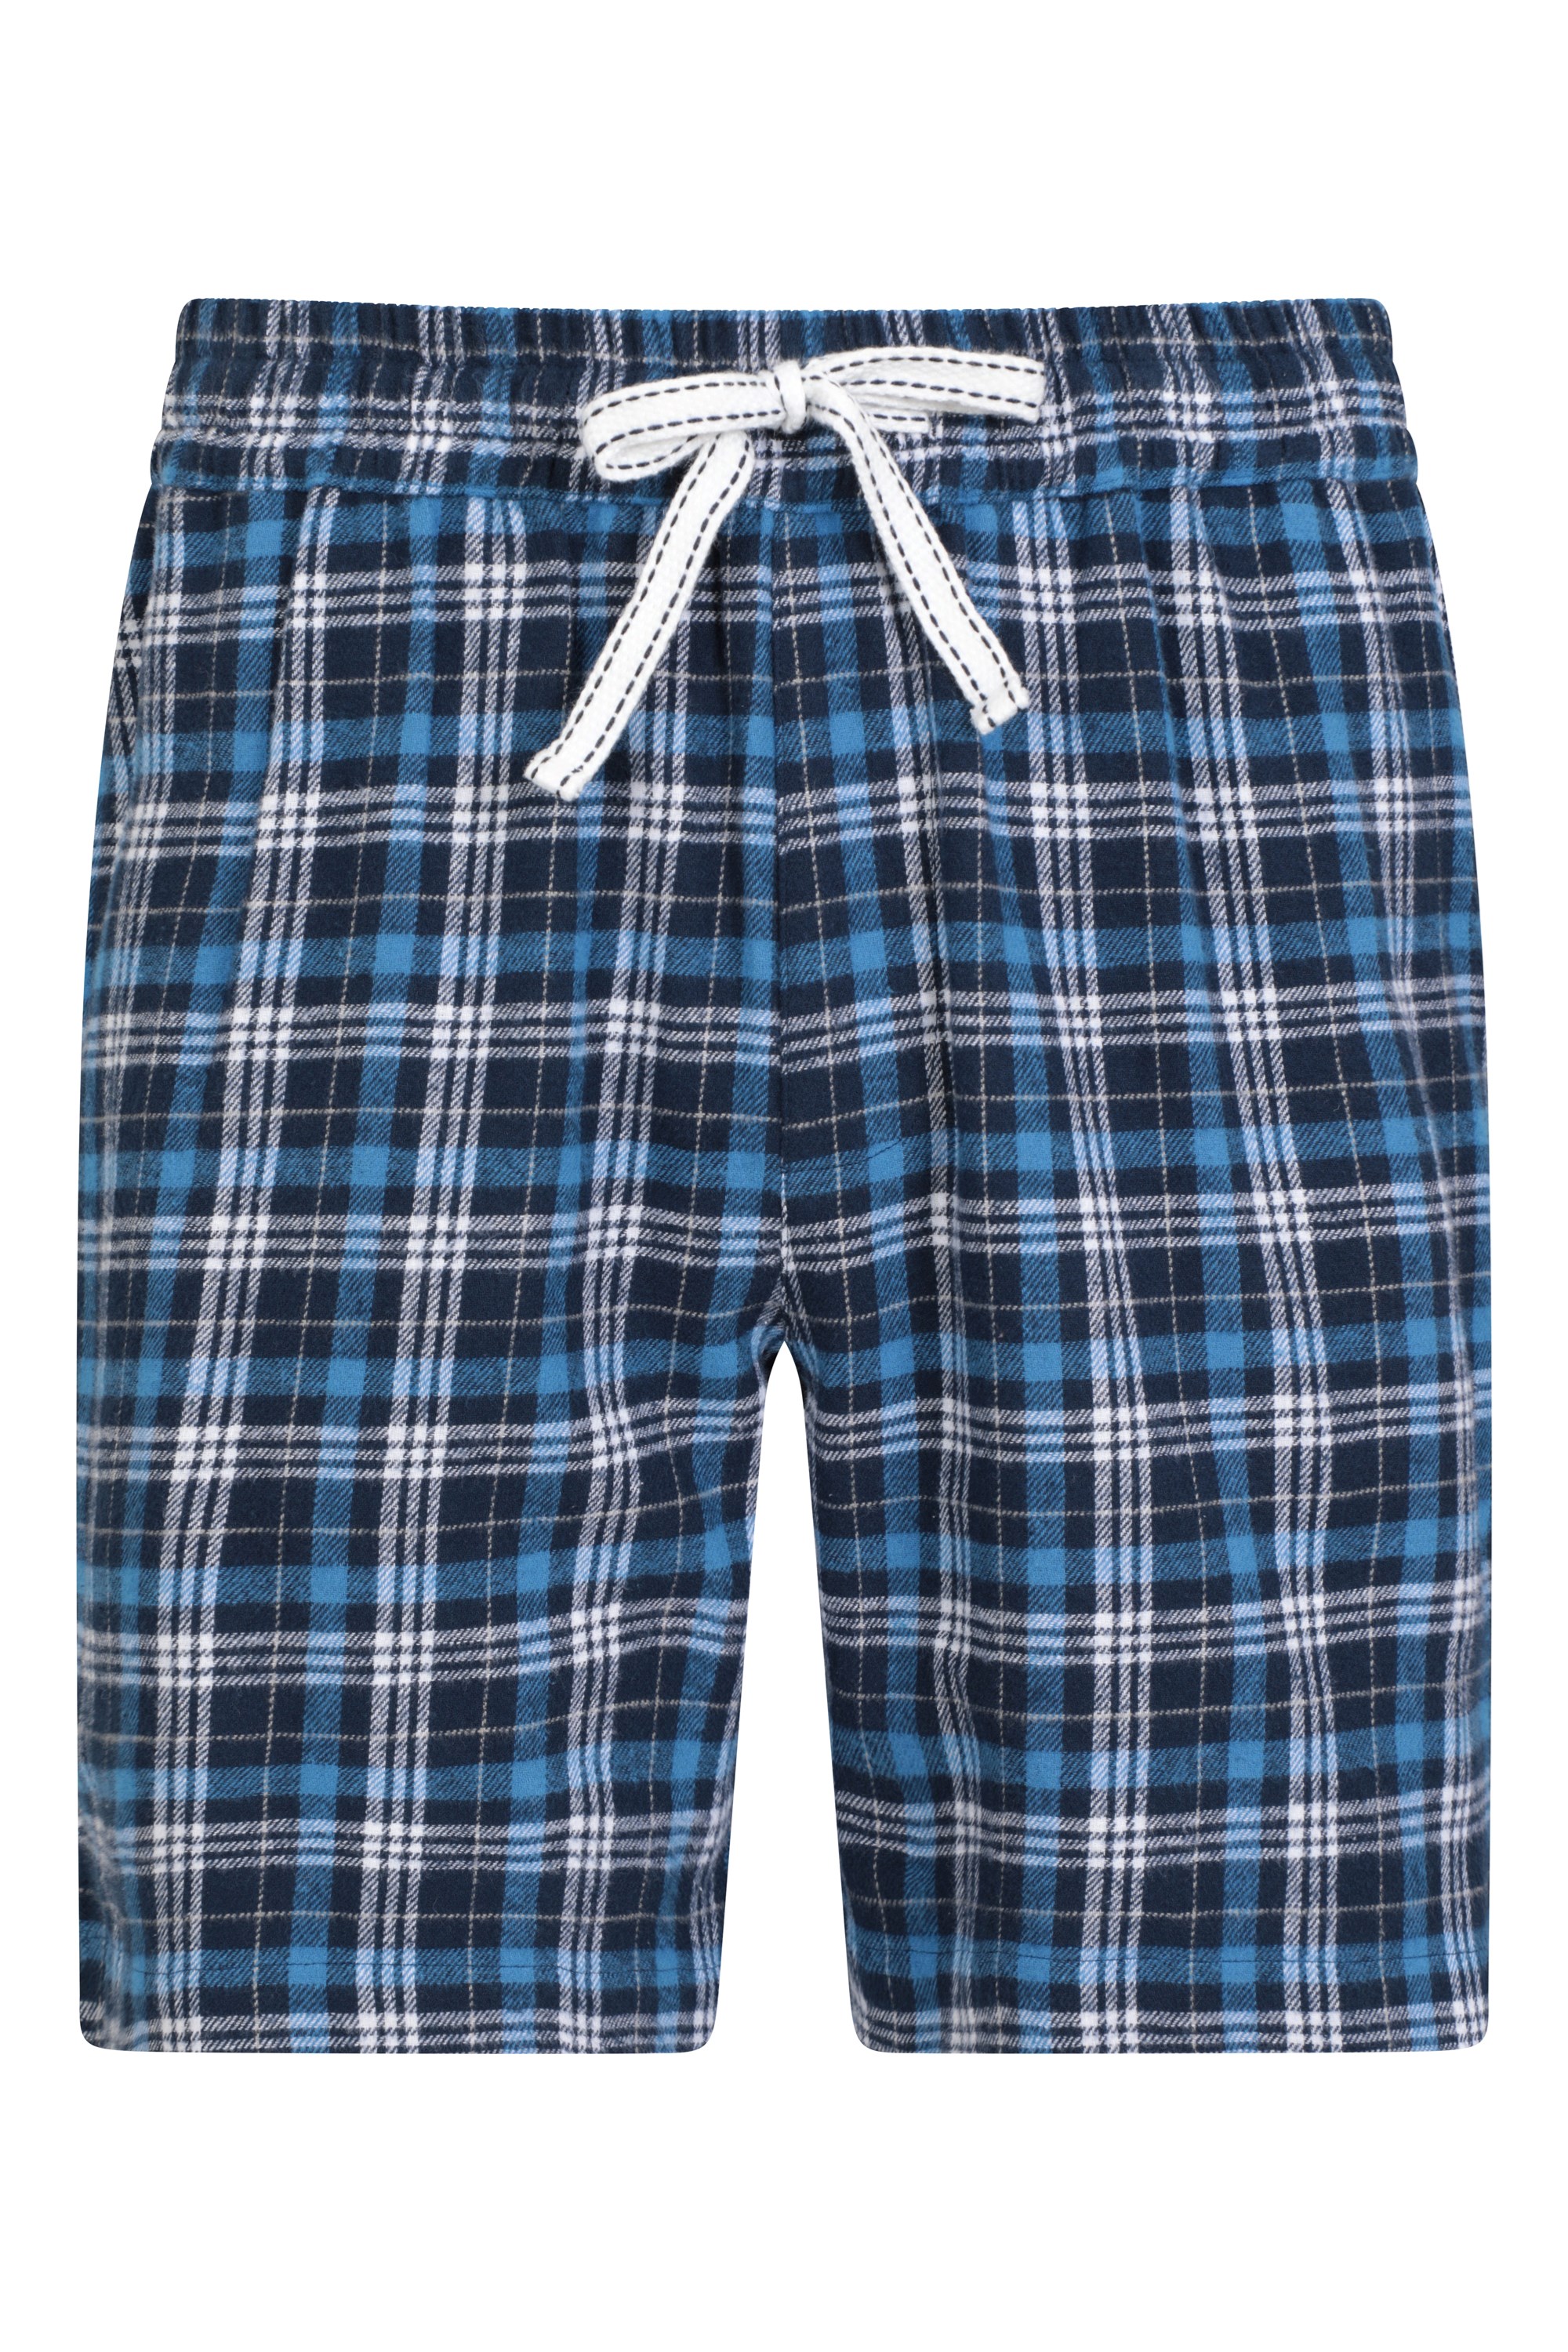 Mens Check Pyjama Shorts - Navy